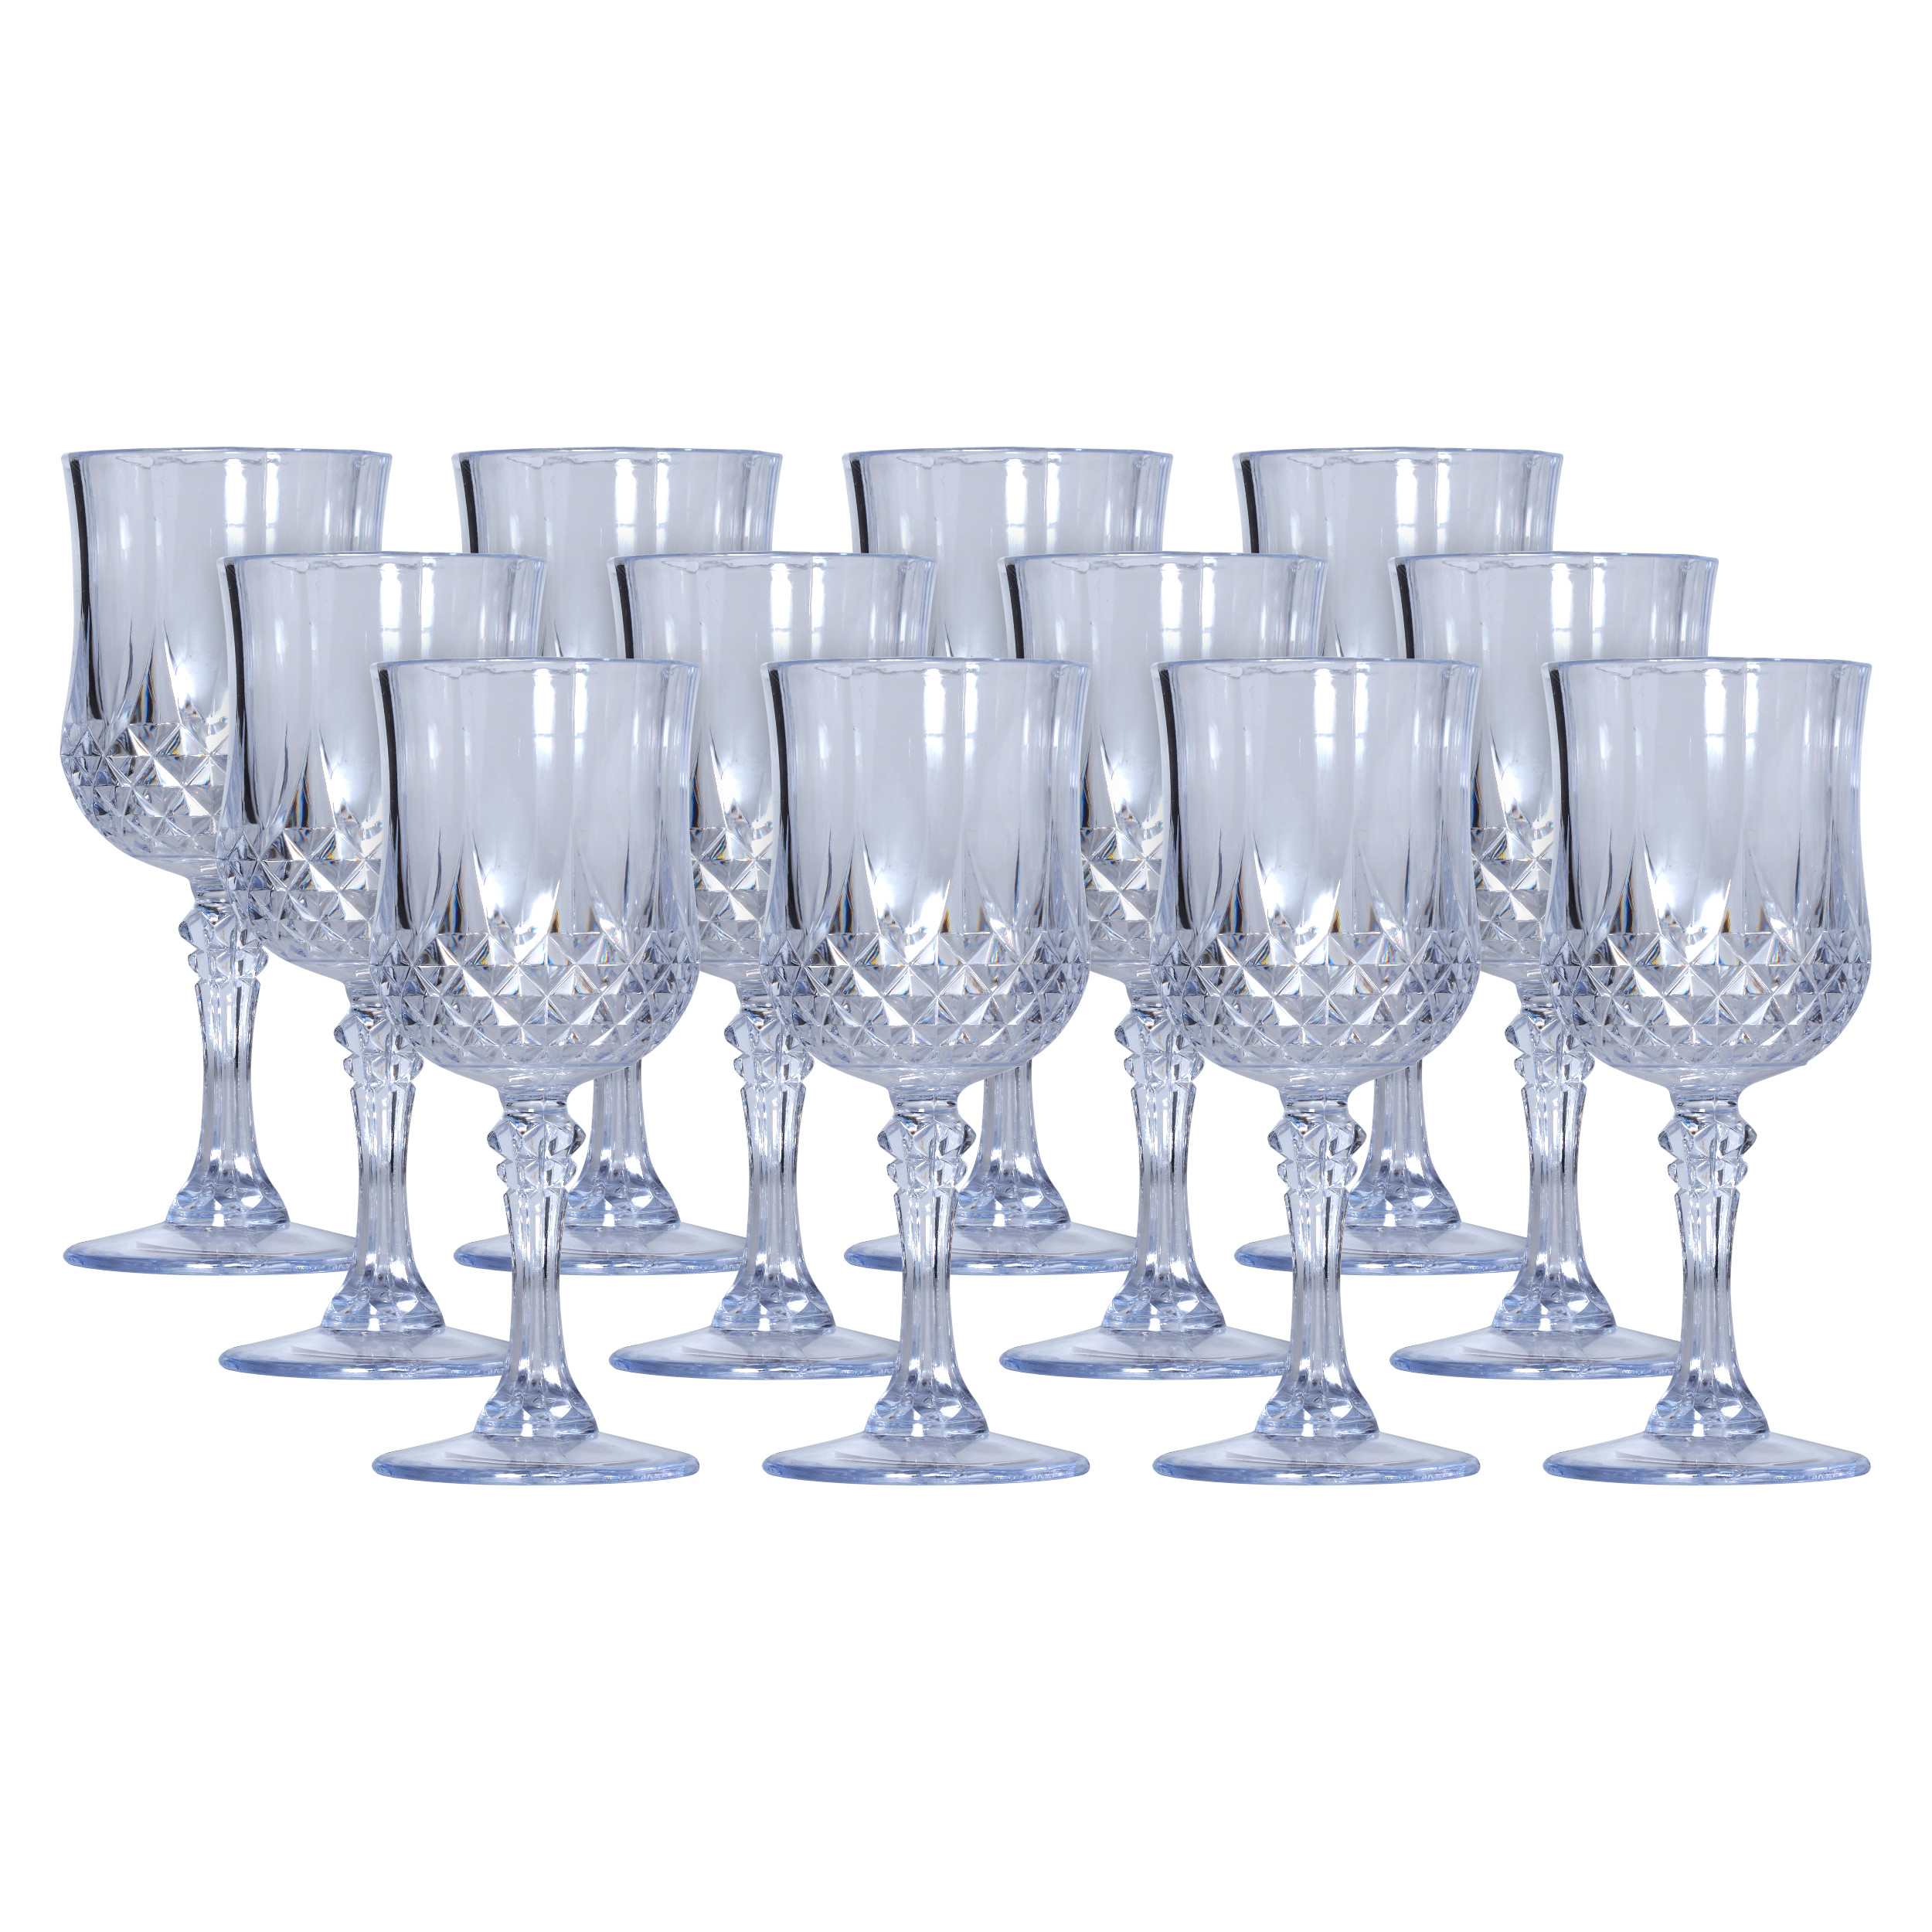 Reusable Plastic Textured Clear Stem Wine Glasses - Looks Like Glass - Set of 12